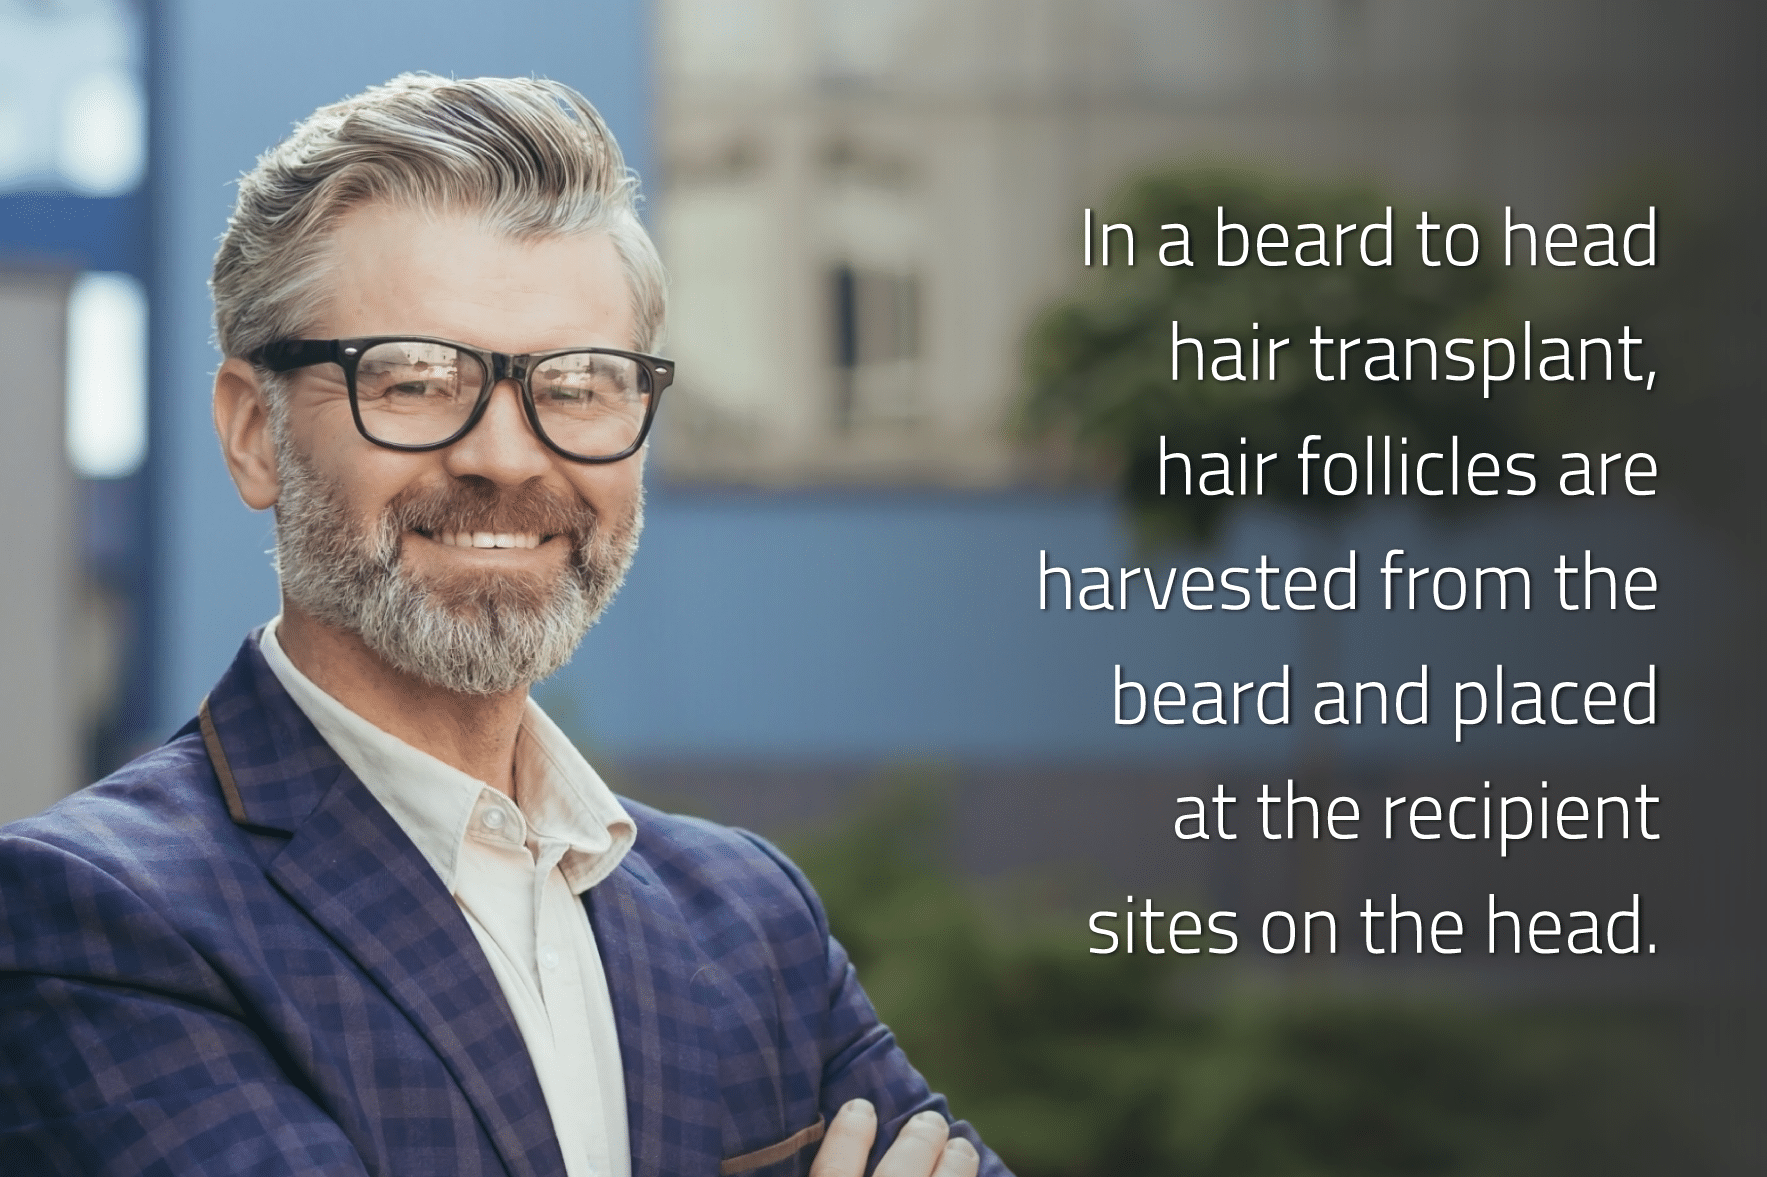 How Does Beard to Head Hair Transplantation Work?